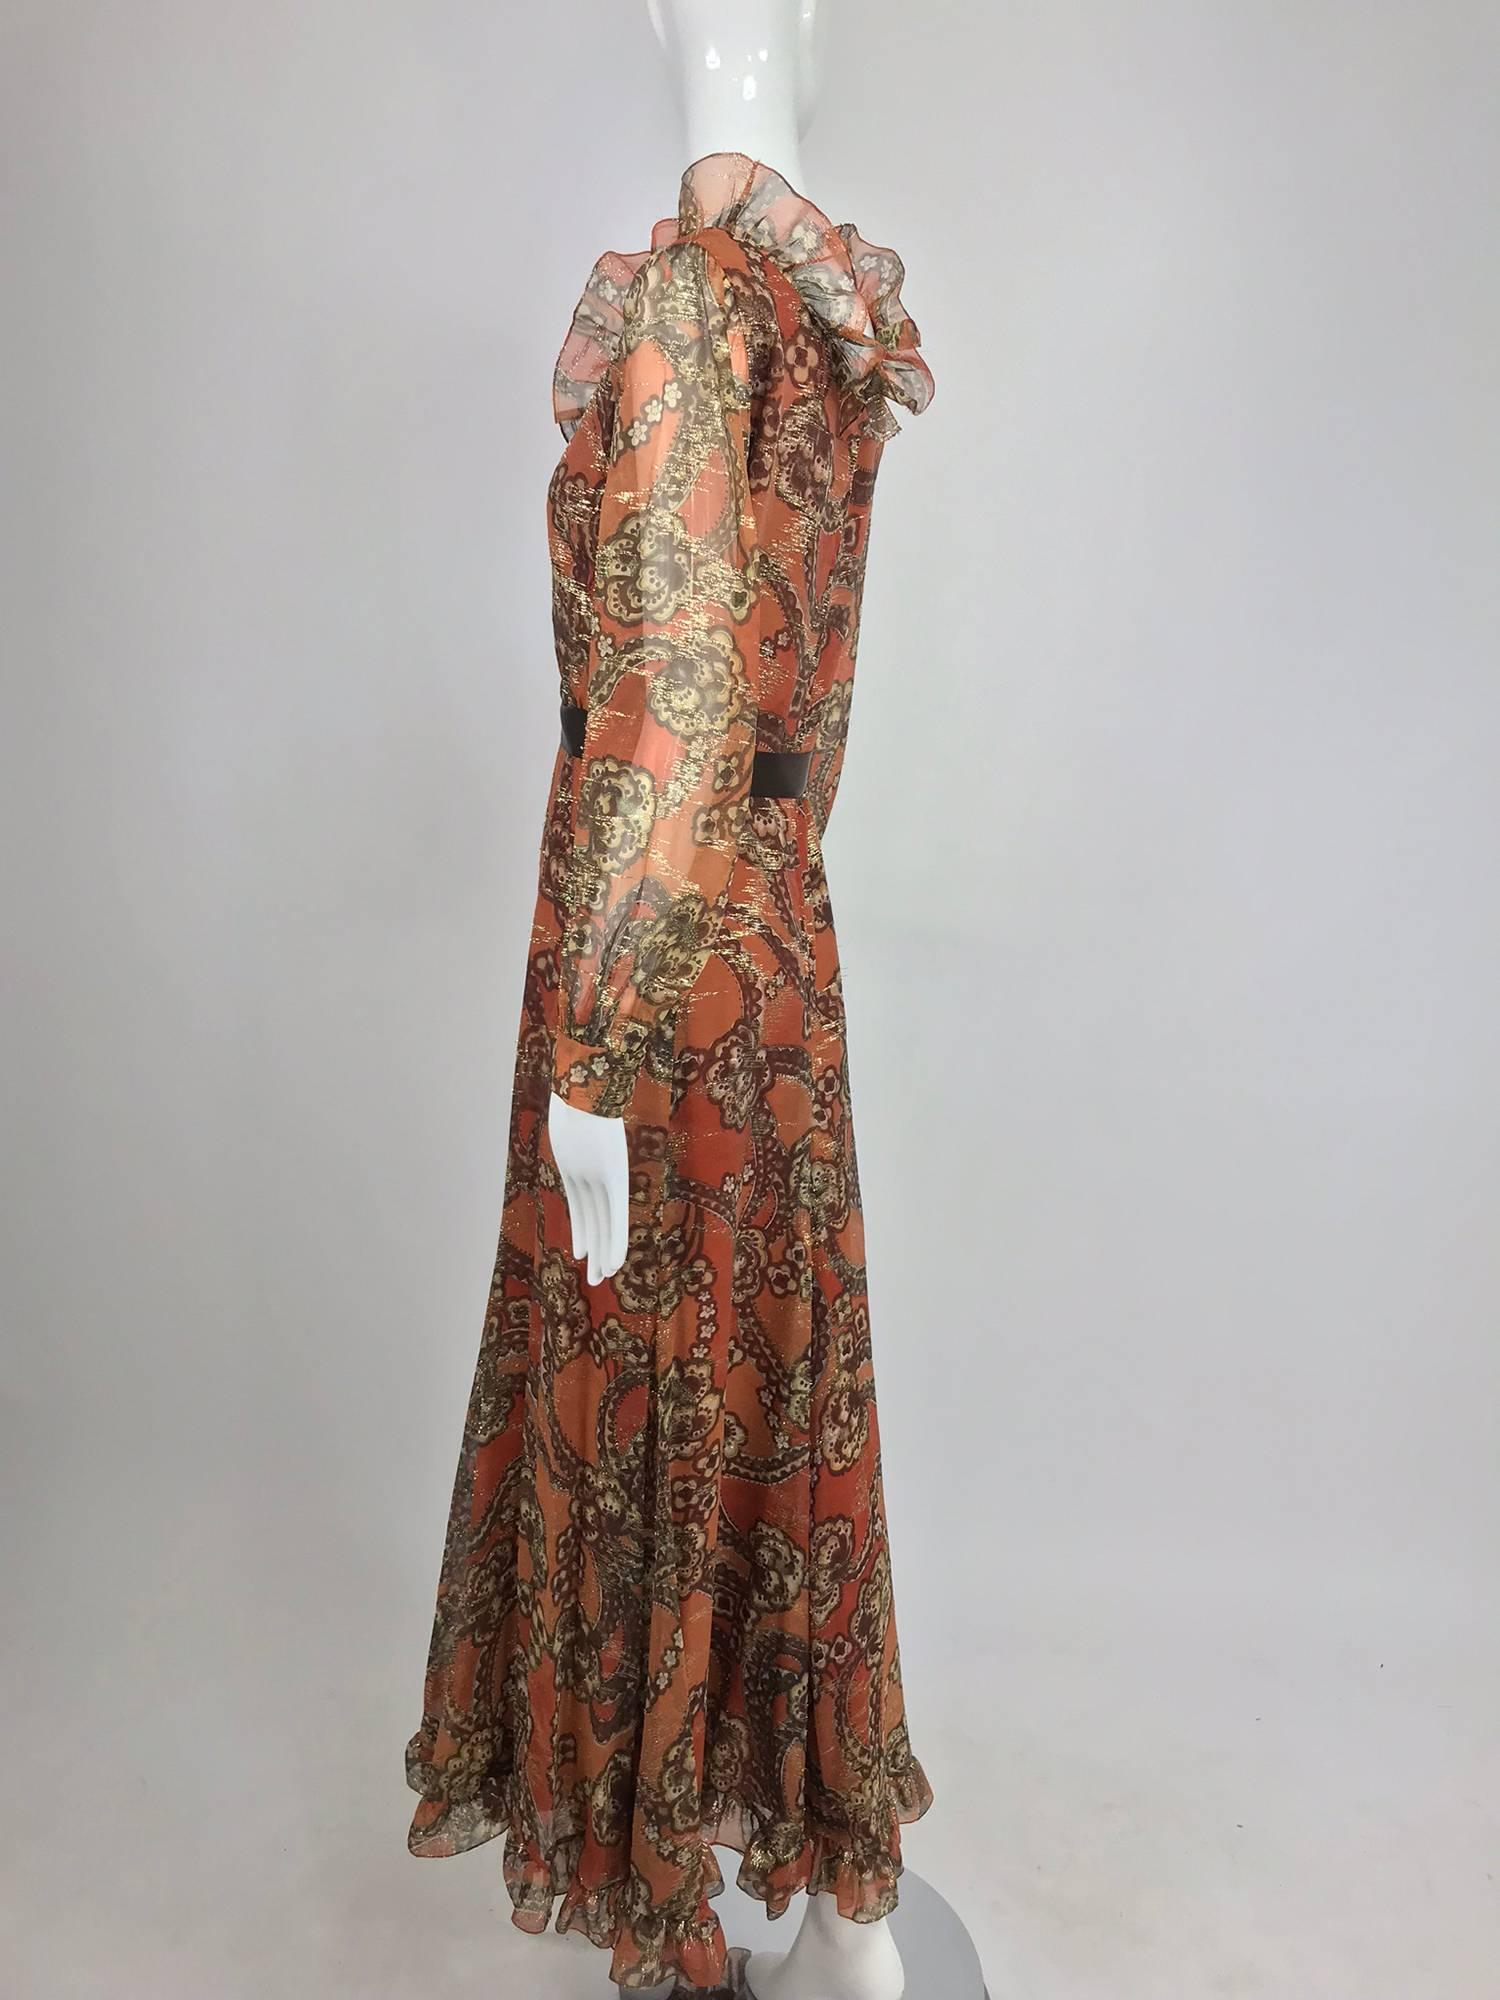 Women's Oscar de la Renta russet print silk chiffon metallic brocade maxi dress 1970s